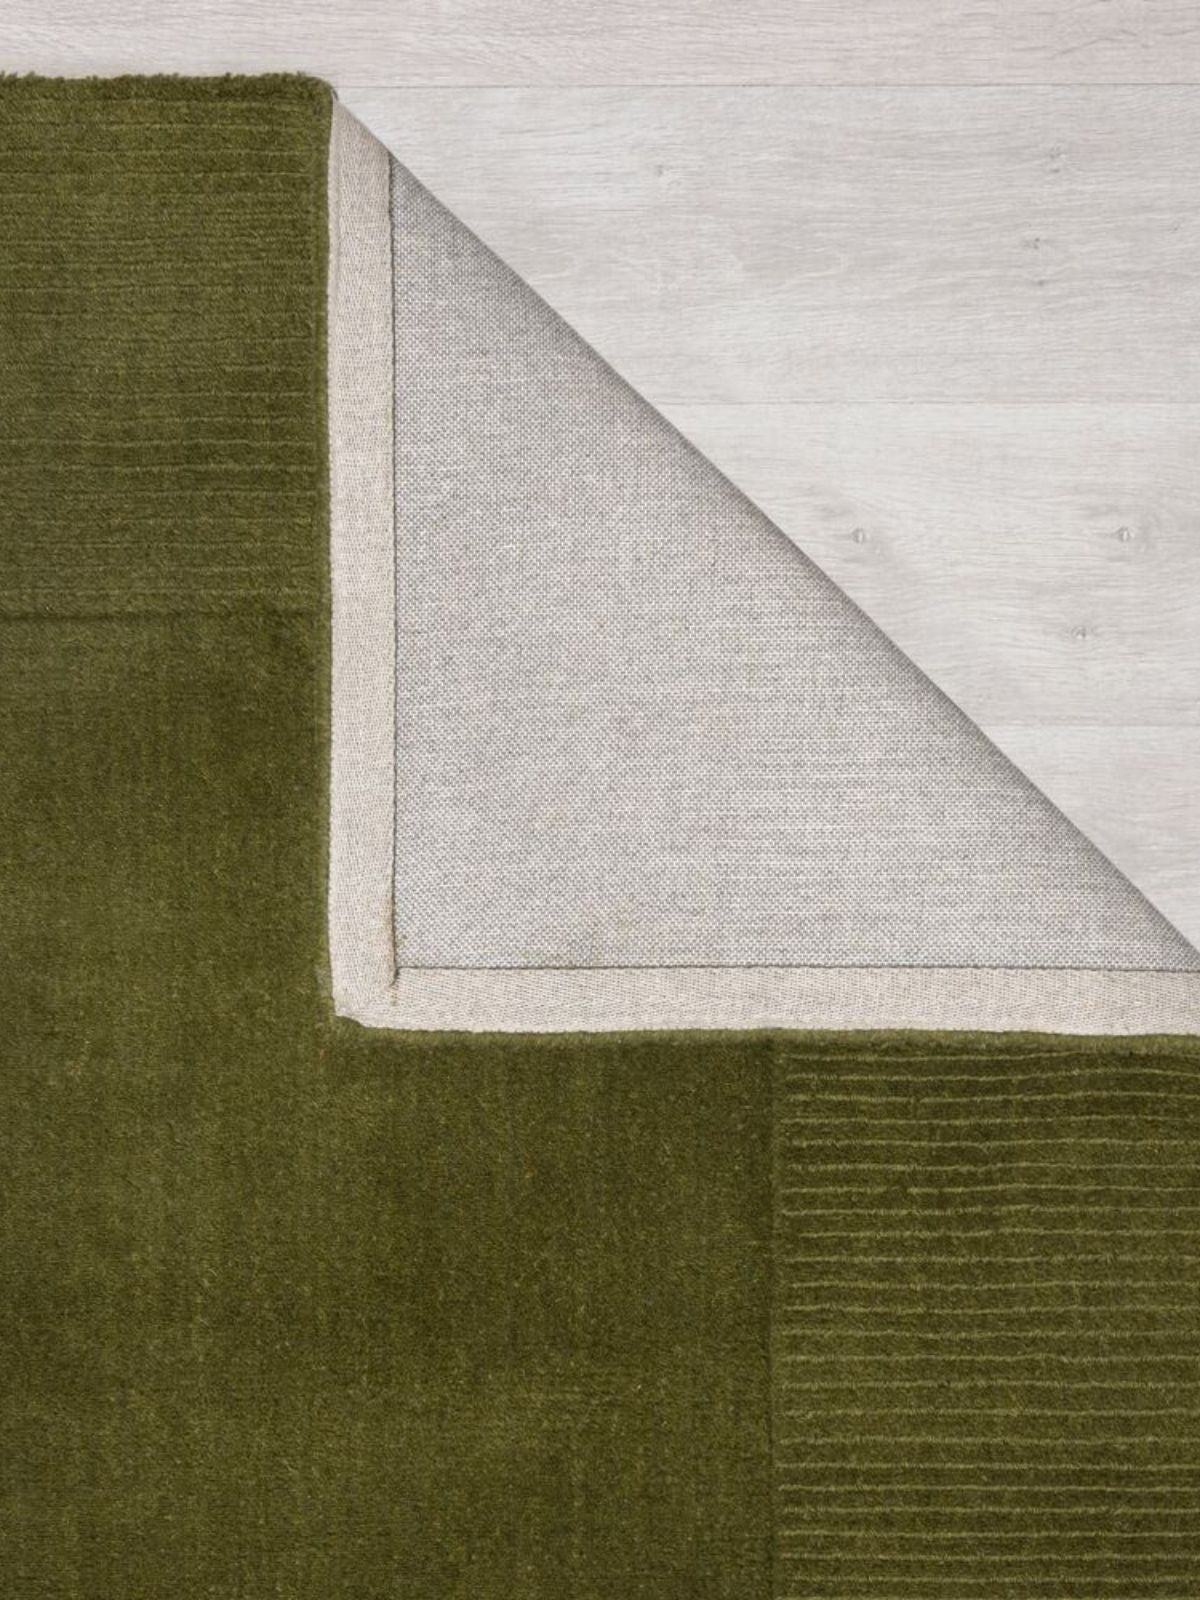 Tappeto di design Textured Wool Border in lana, colore verde-3